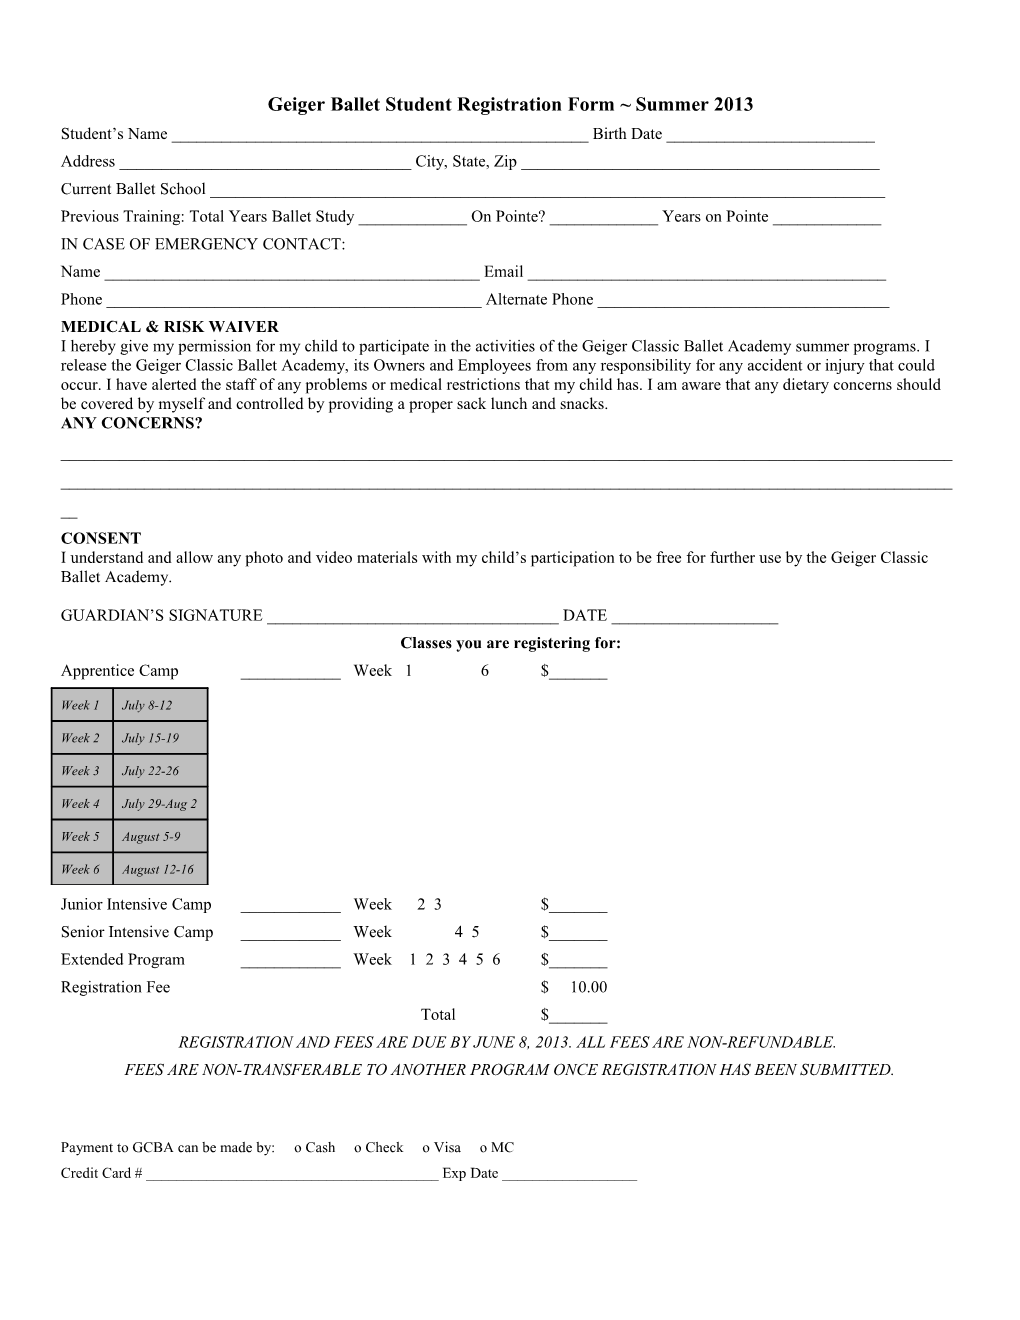 Student Registration Form - Summer 2004